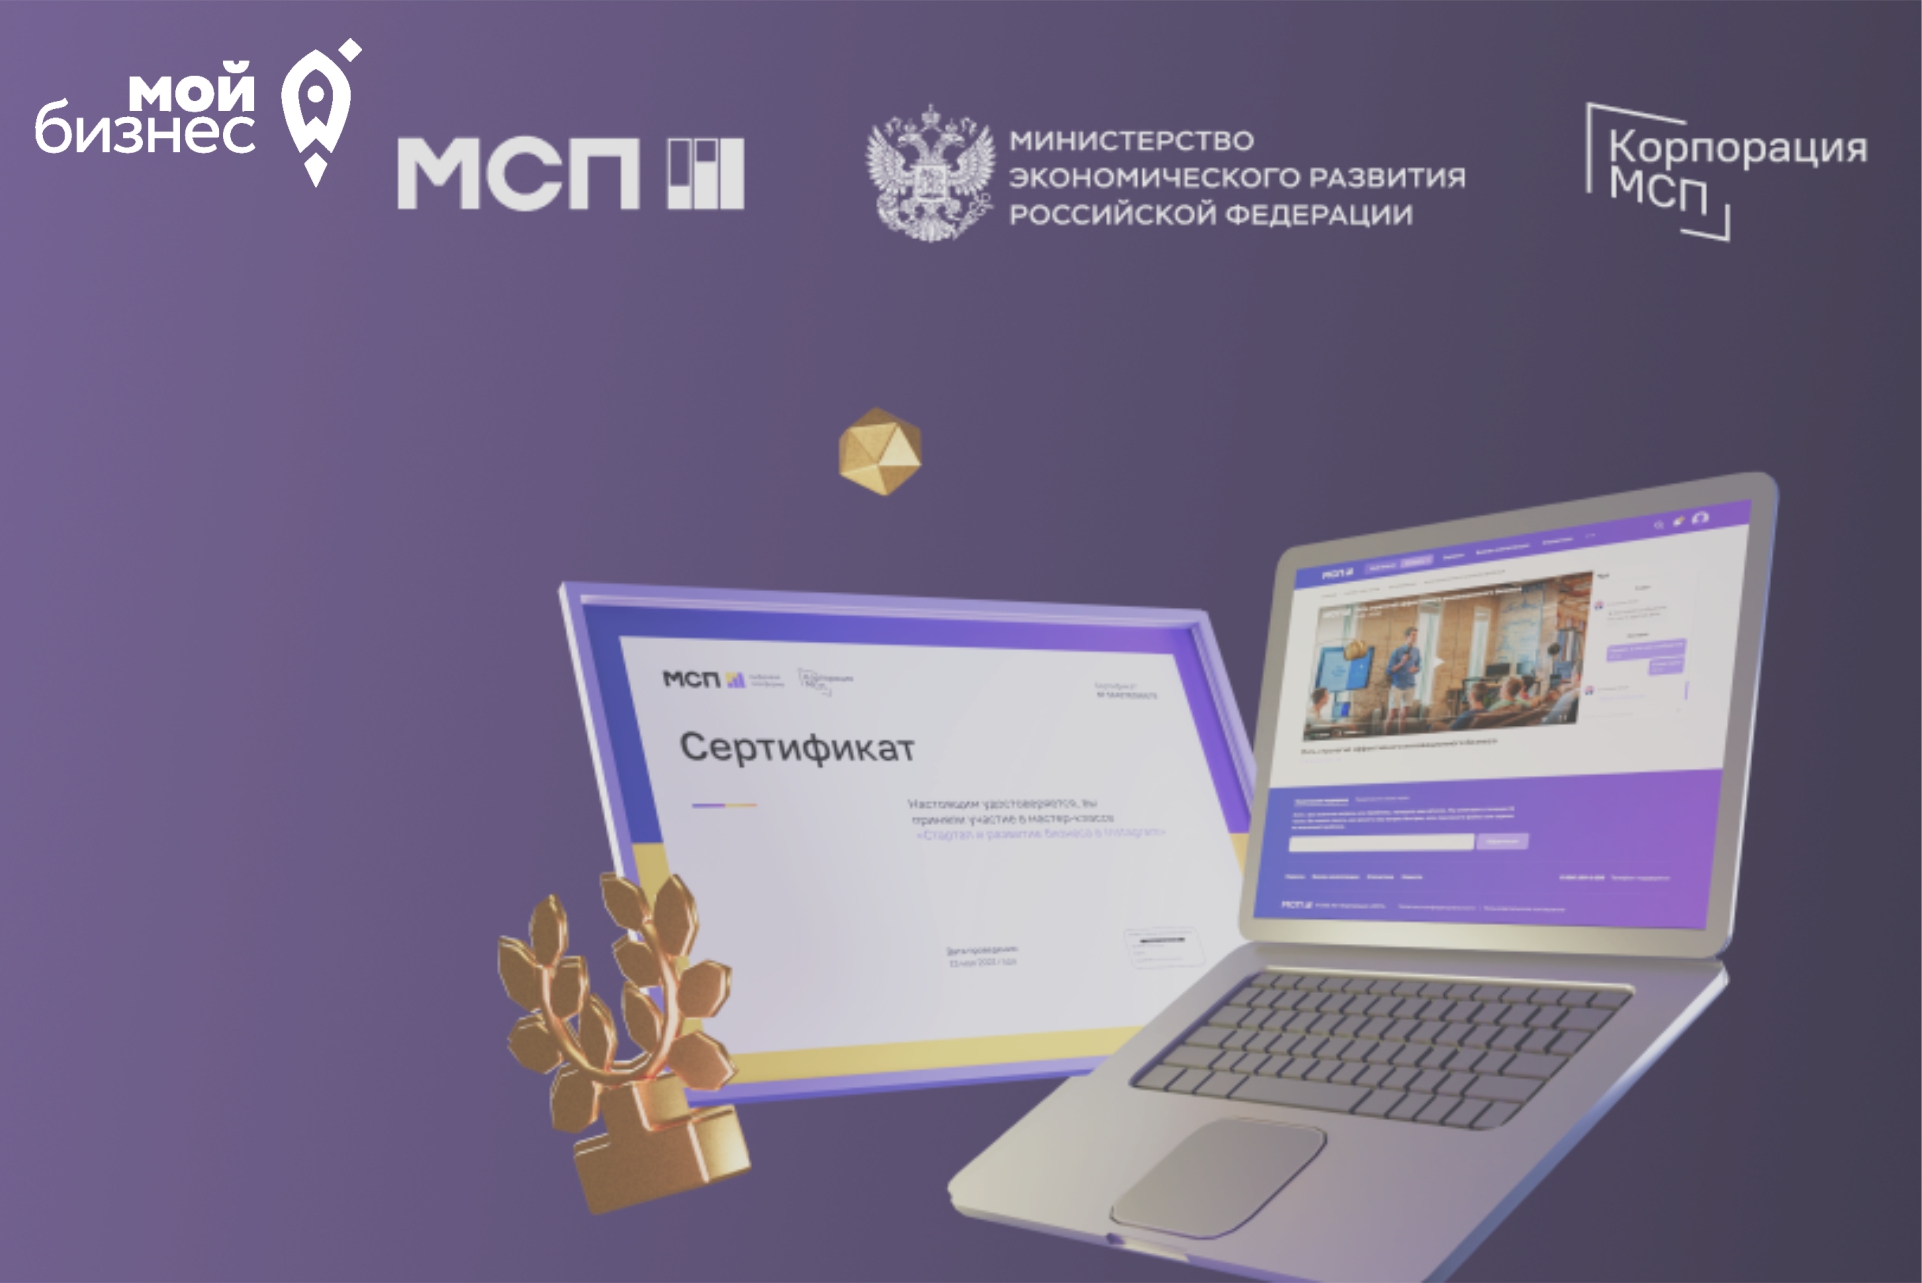 На Цифровой платформе МСП.РФ открыли доступ к сервису «Сфера знаний»